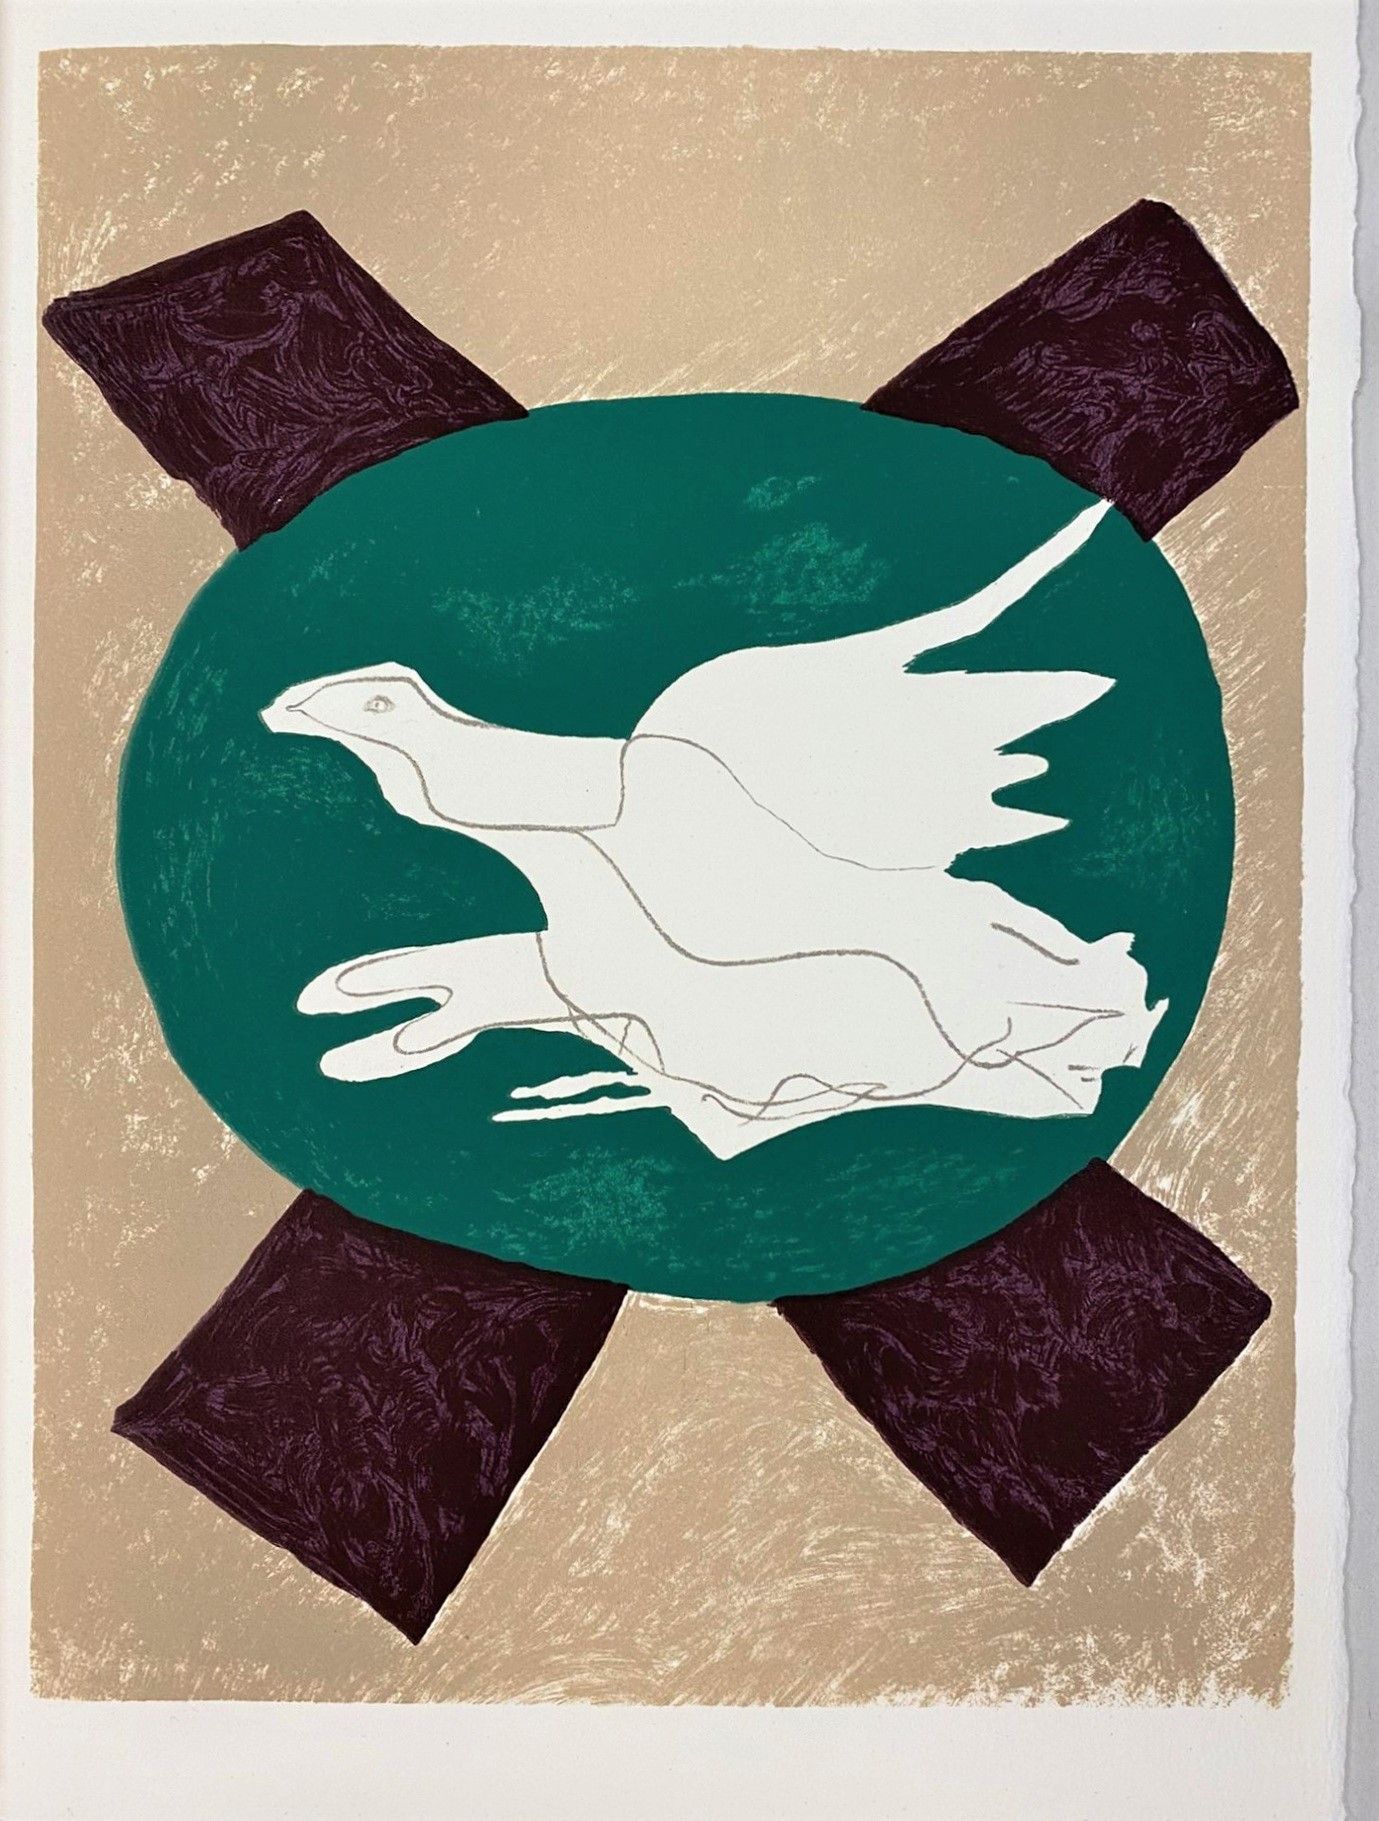 Georges Braque 乔治-布拉克（后）--X背景上的小鸟

彩色石板画，阿克塞斯羊皮纸。

无署名，无编号，第二版

来自编号为21/575的作品集
&hellip;